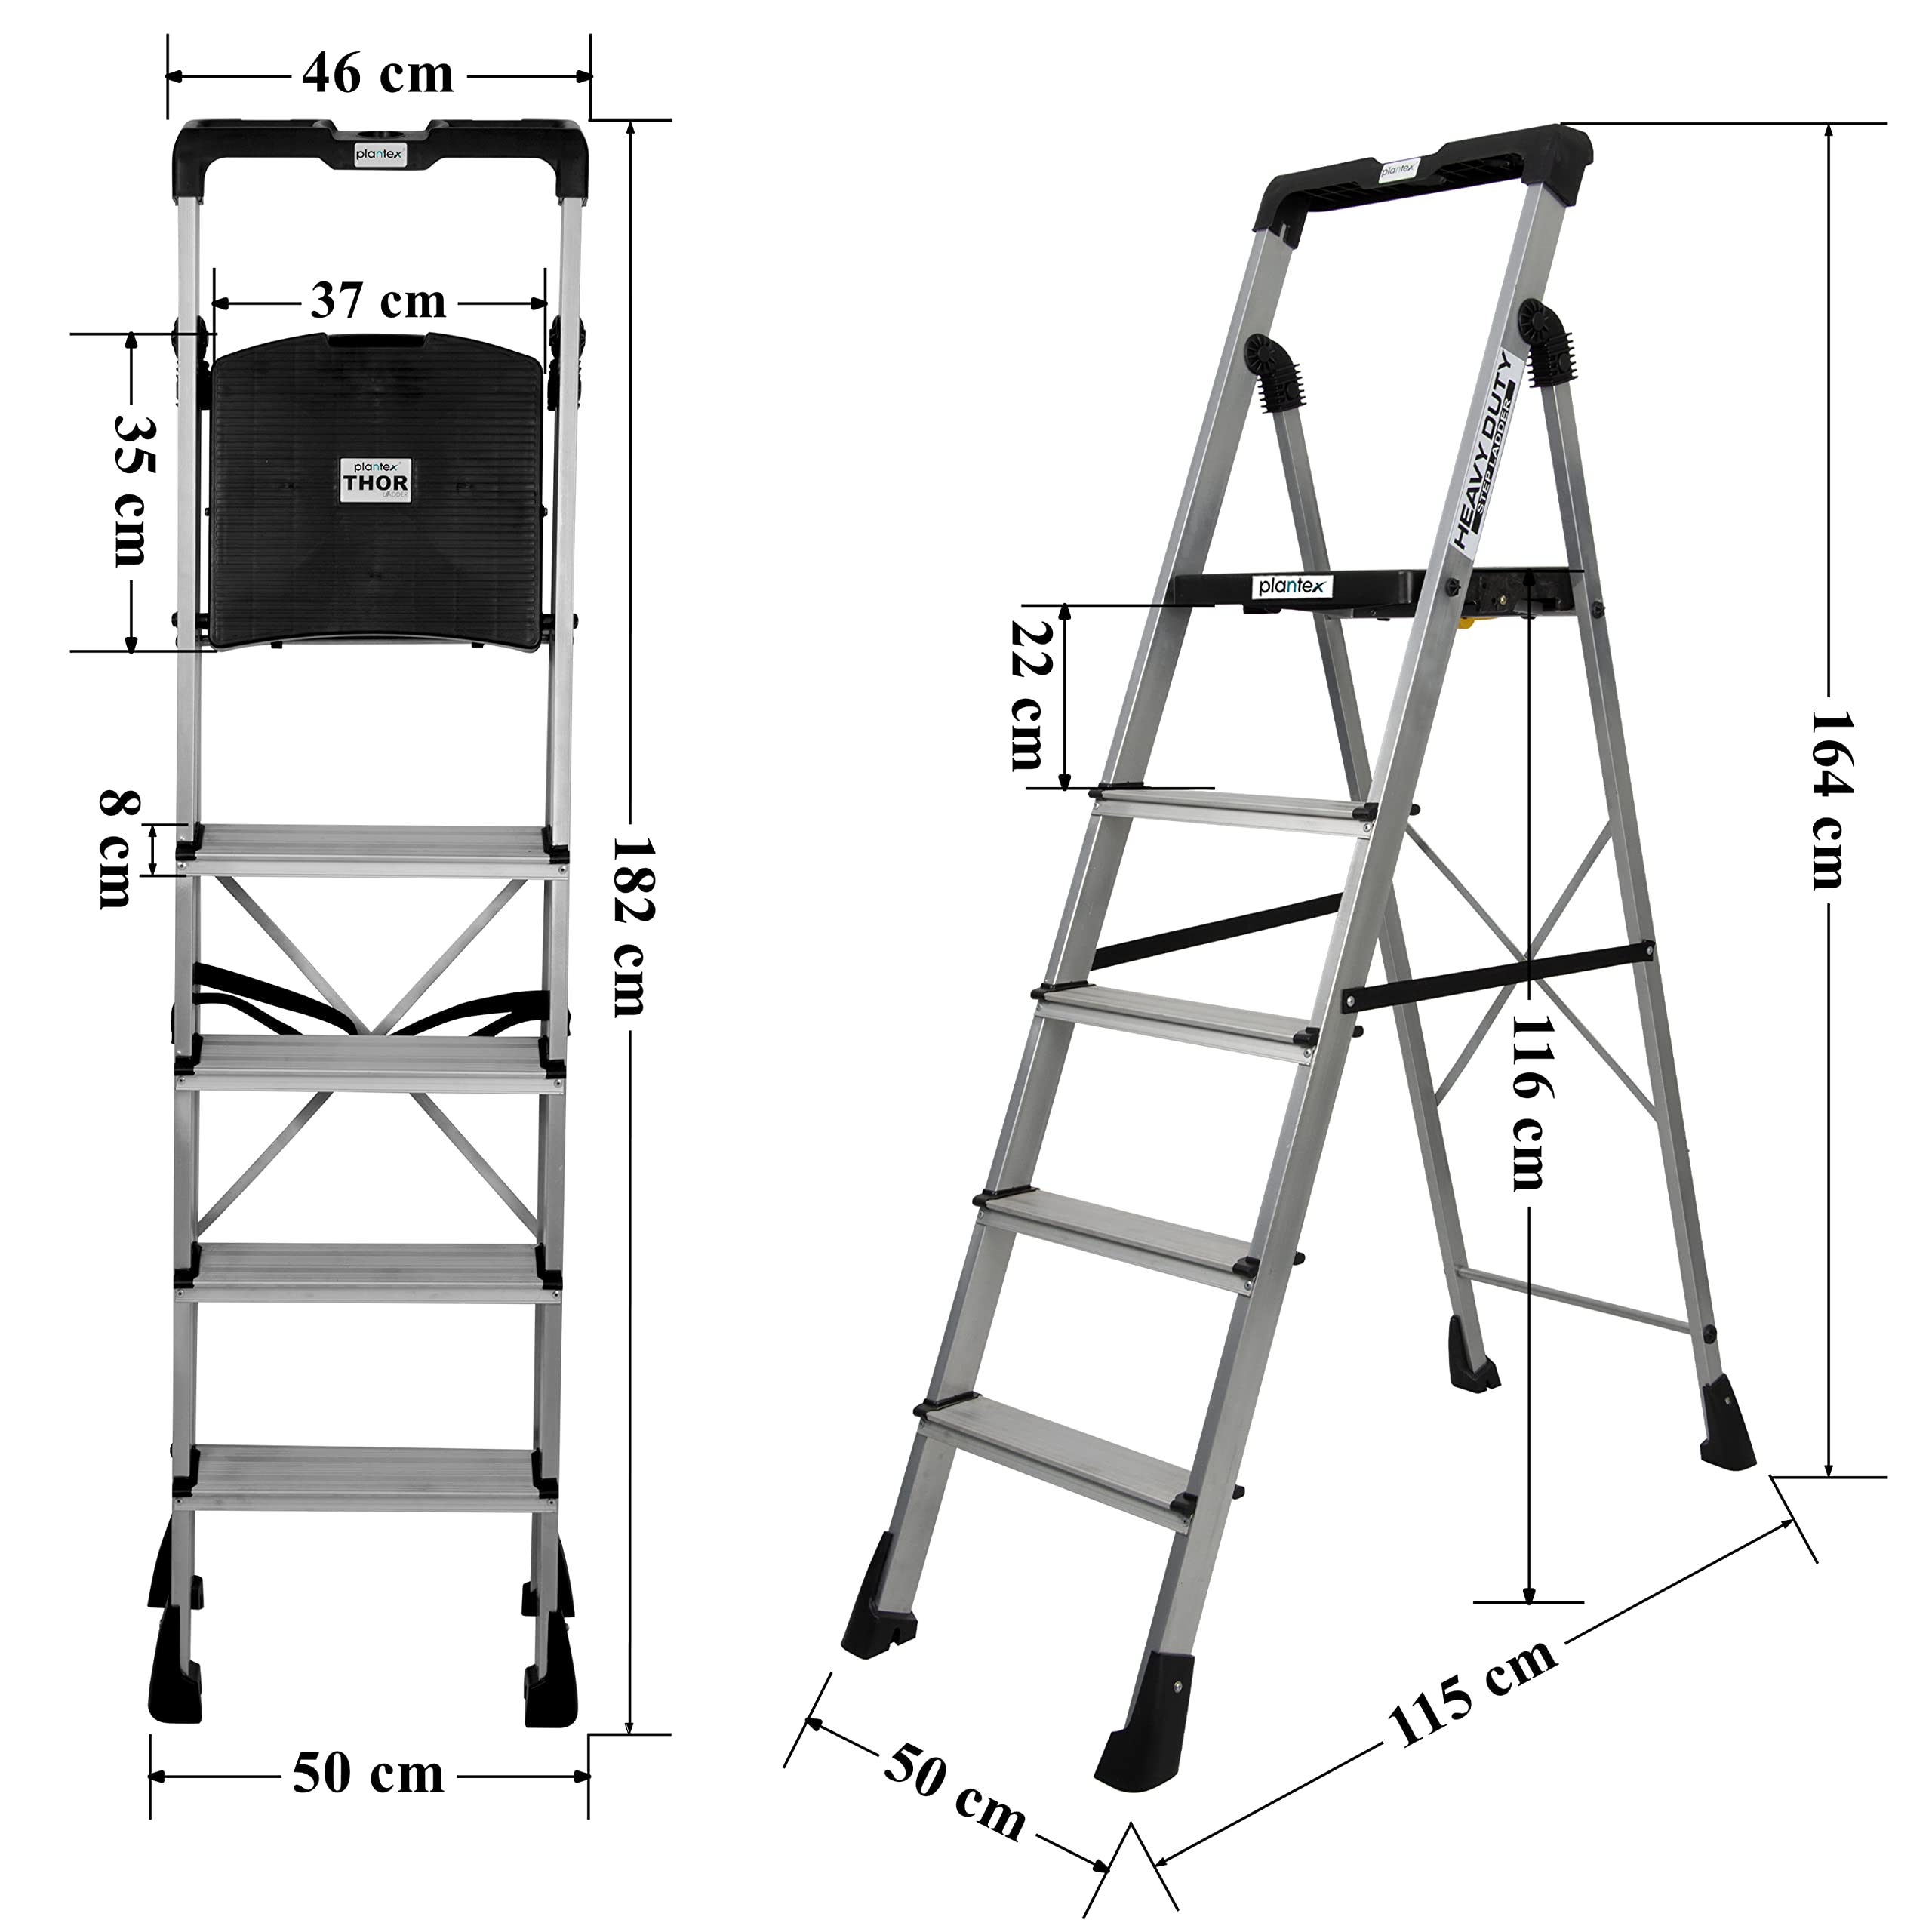 Plantex Thor Aluminium Step Folding Ladder 5 Step for Home with Advanced Locking System - Anti Slip 5 Step Ladder (Silver & Black)